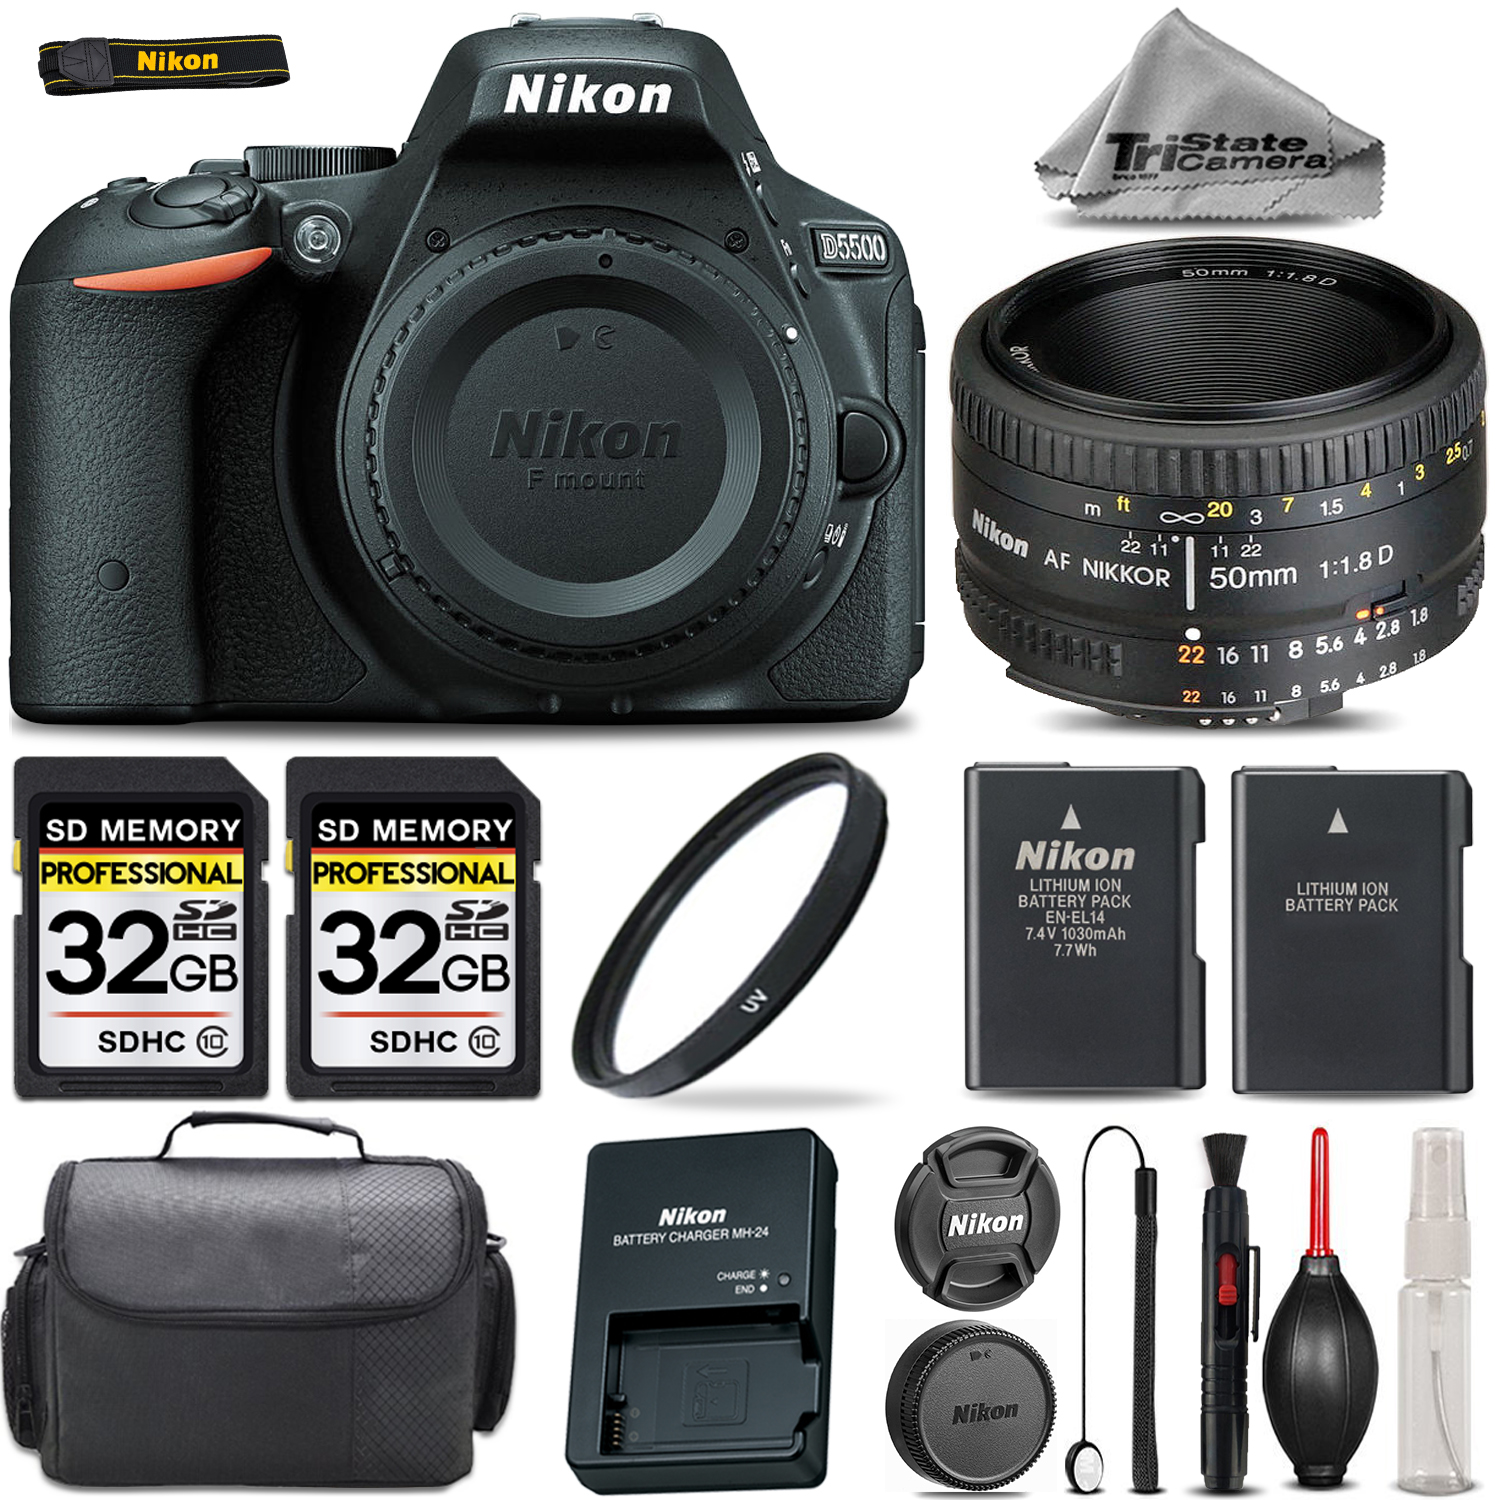 D5500 DSLR Camera 24.2MP + Nikon AF 50mm 1.8D +EXT BATT + 64GB STORAGE KIT *FREE SHIPPING*